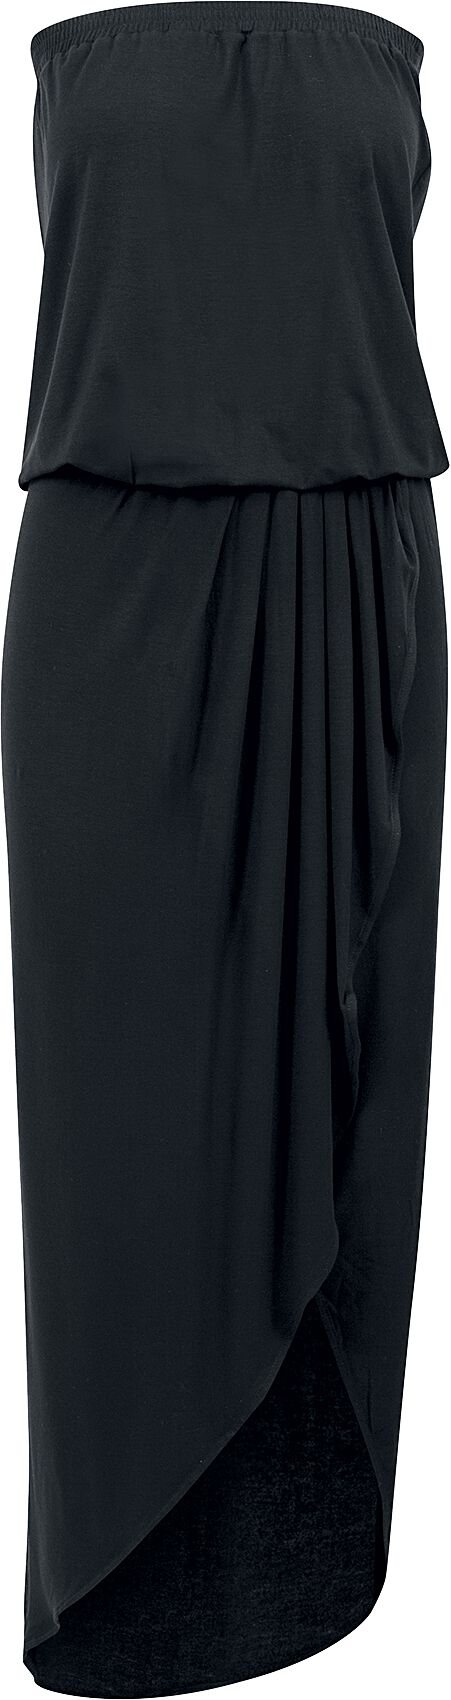 Urban Classics Ladies Viscose Bandeau Dress Langes Kleid schwarz in L